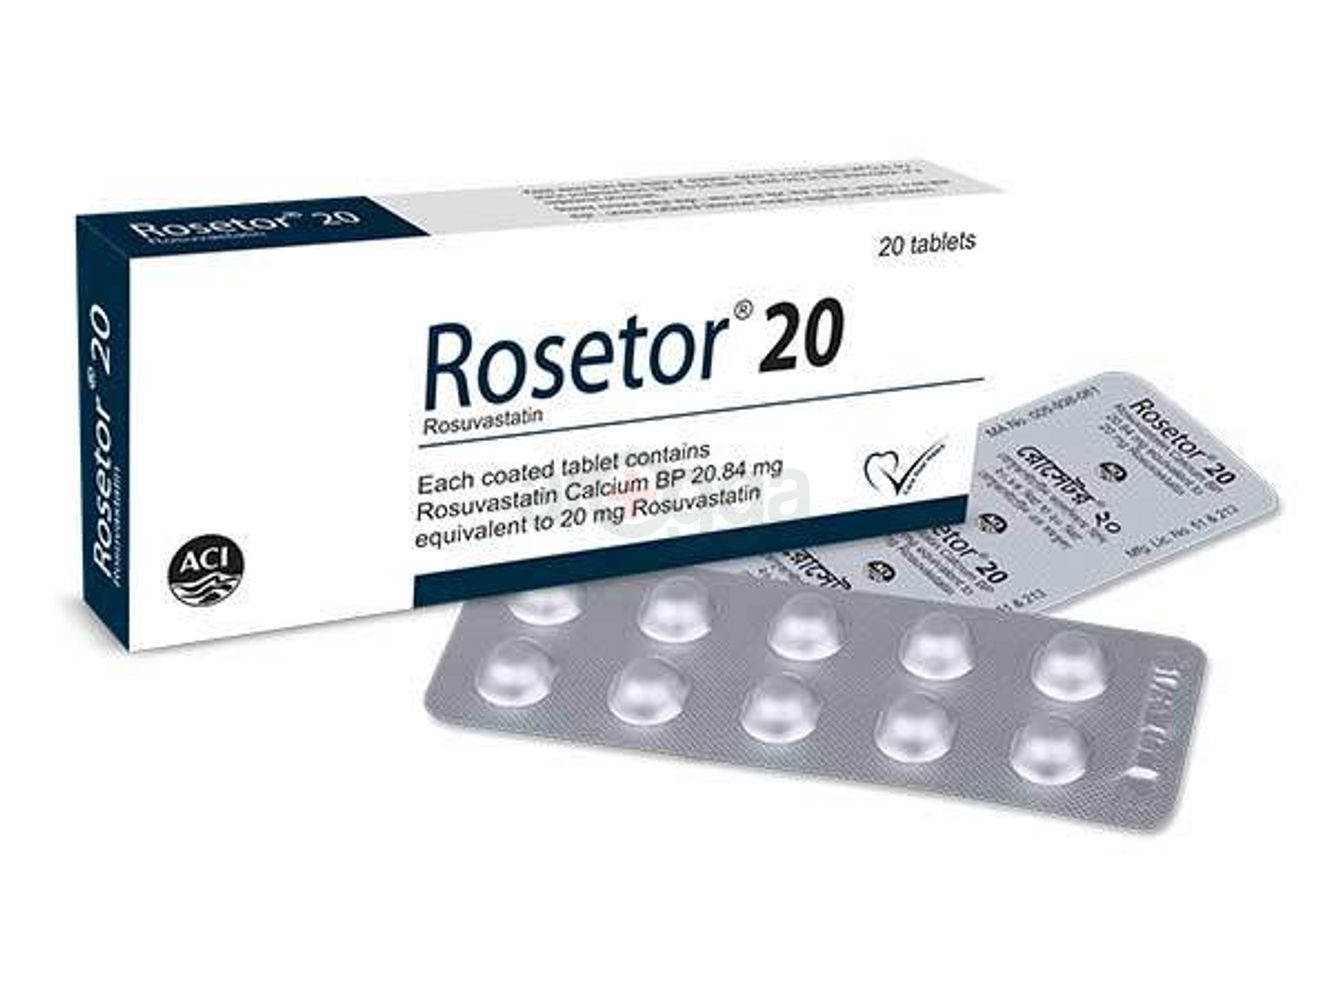 Rosetor 20